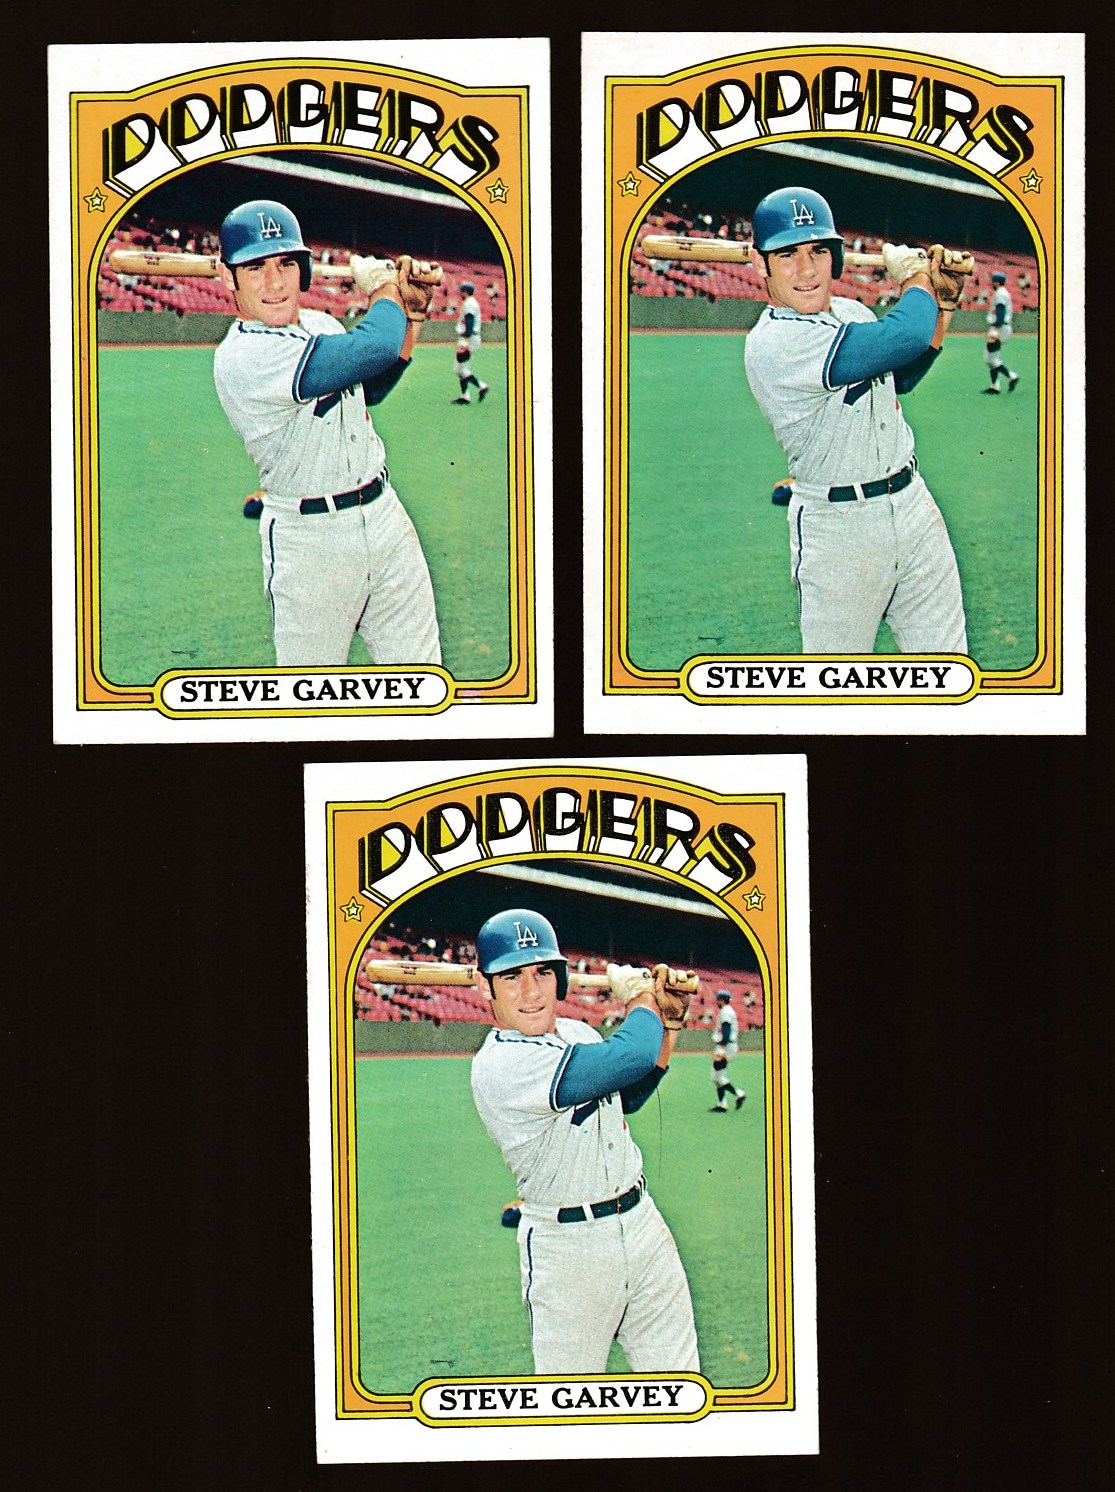 1972 Topps #774 Luis Alvarado Chicago White Sox High Number Baseball Card NM